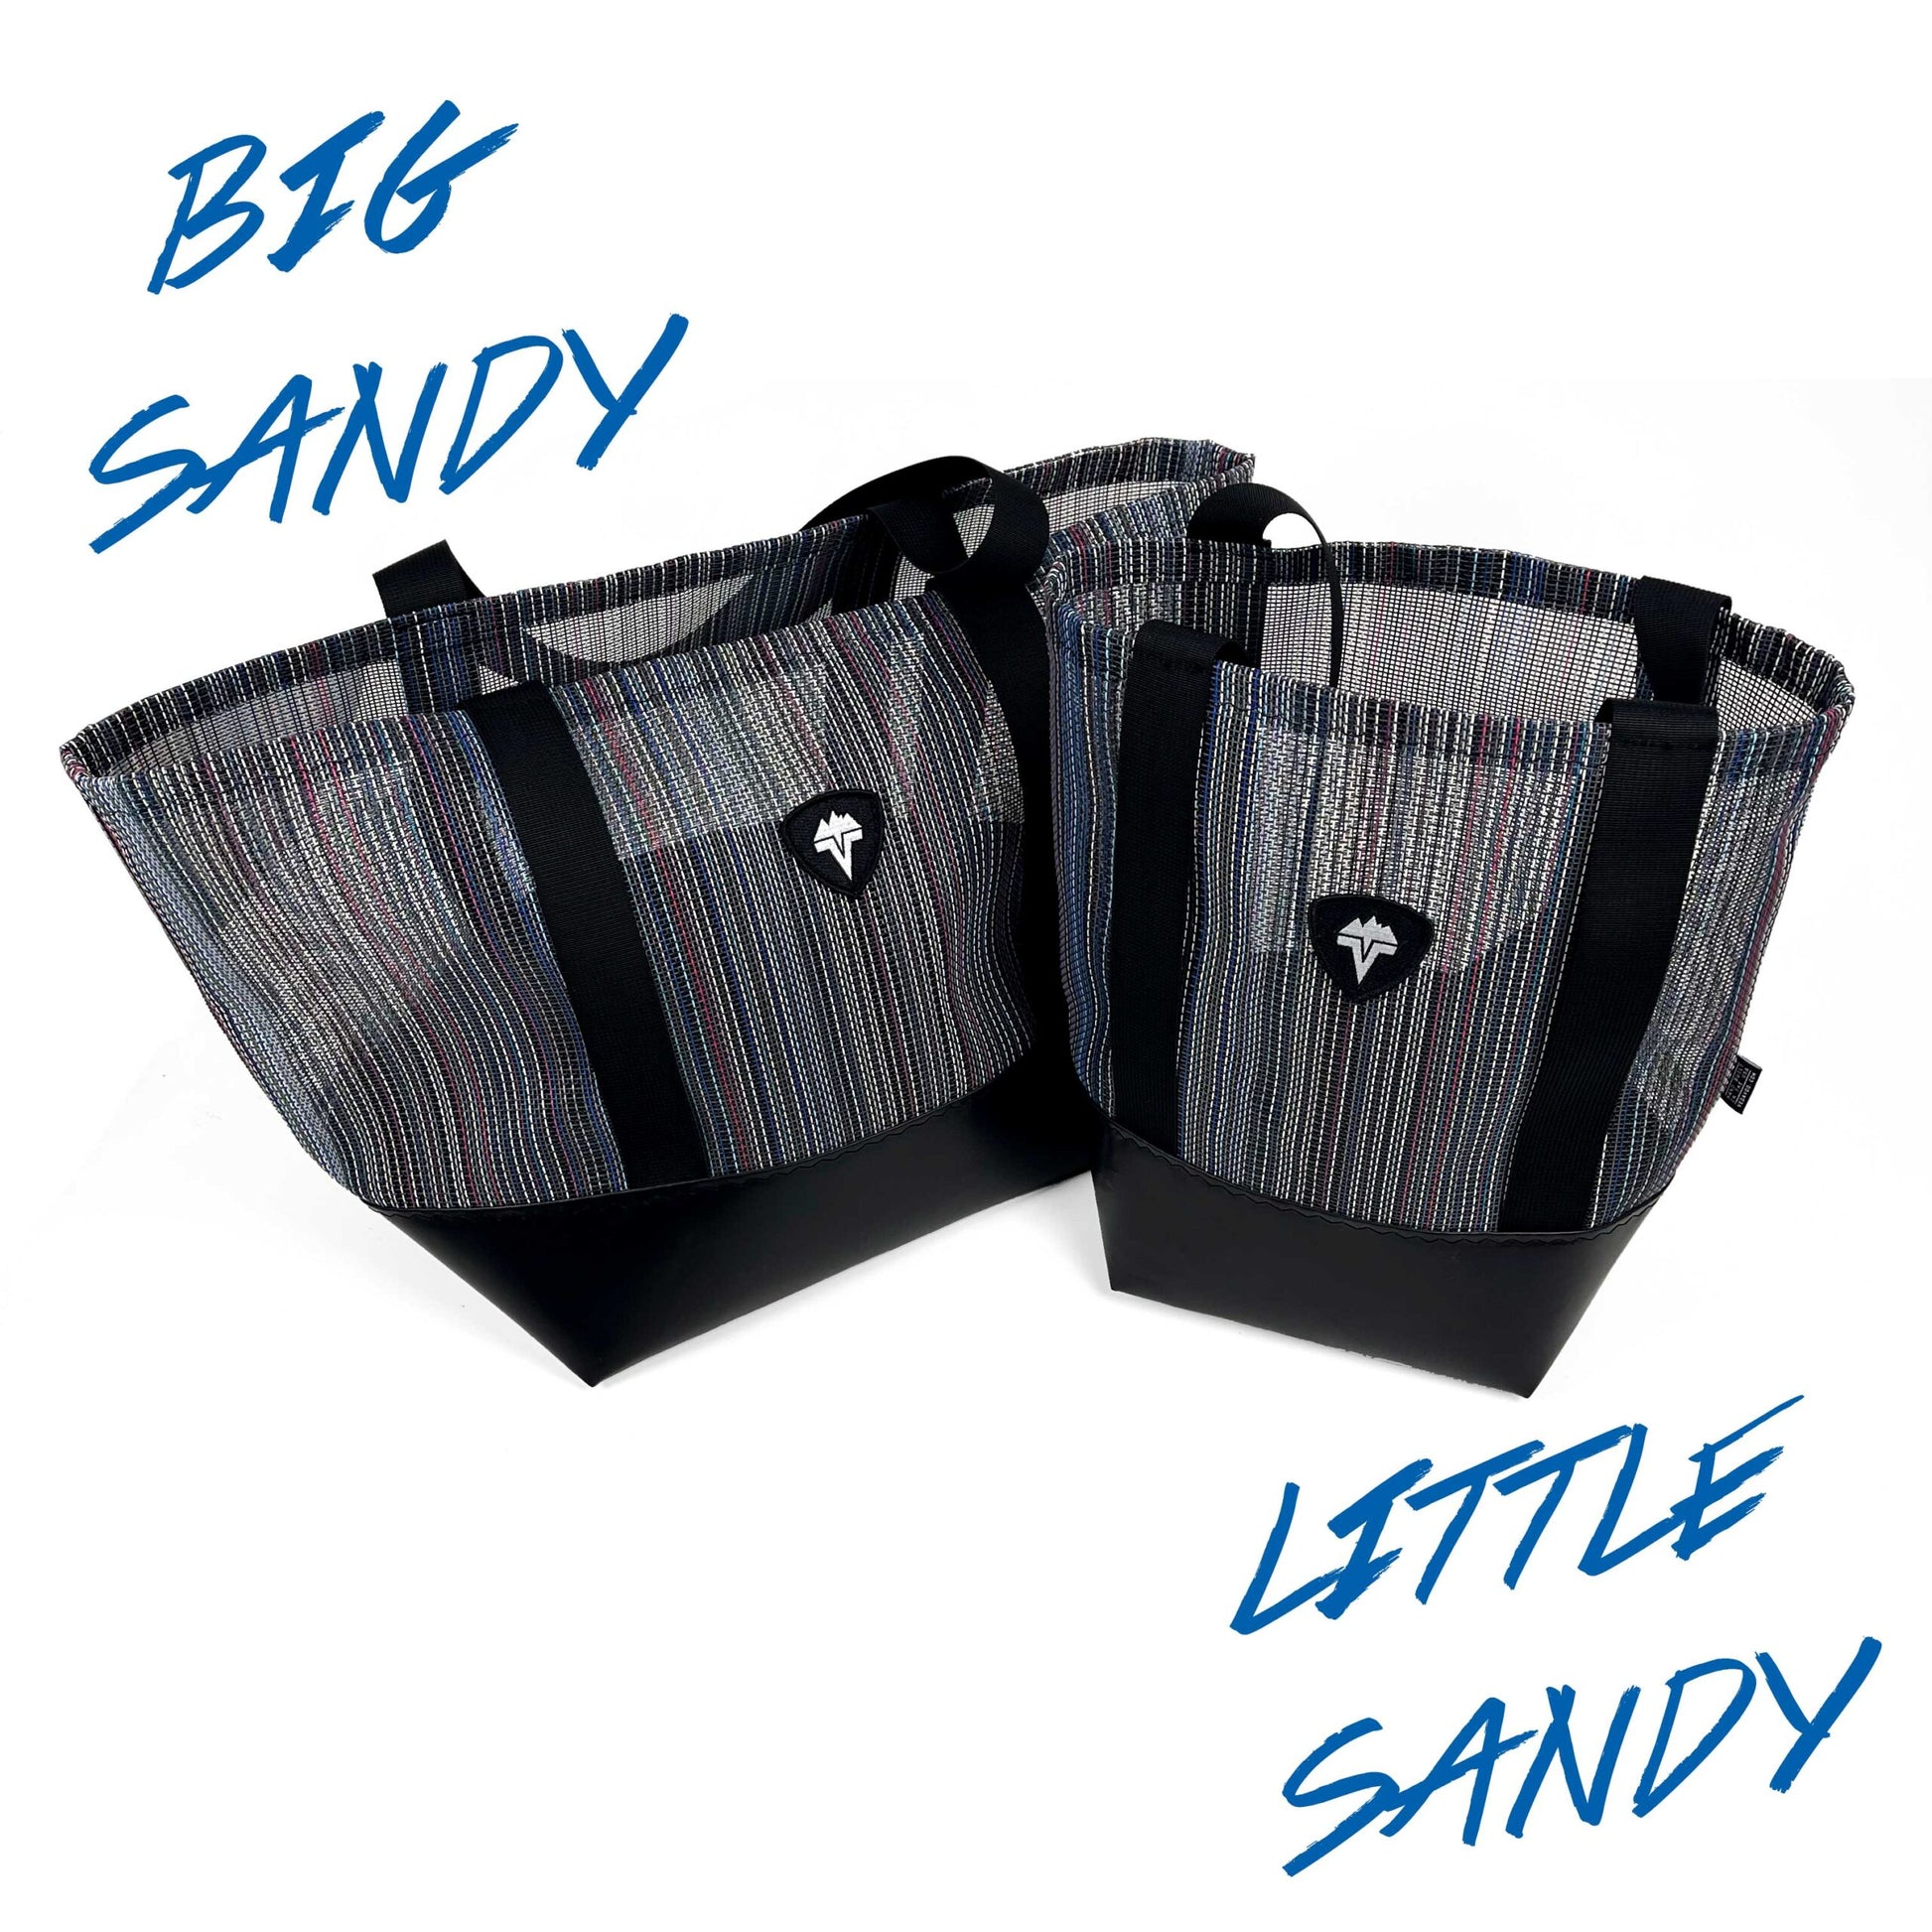 Sandy tote bag